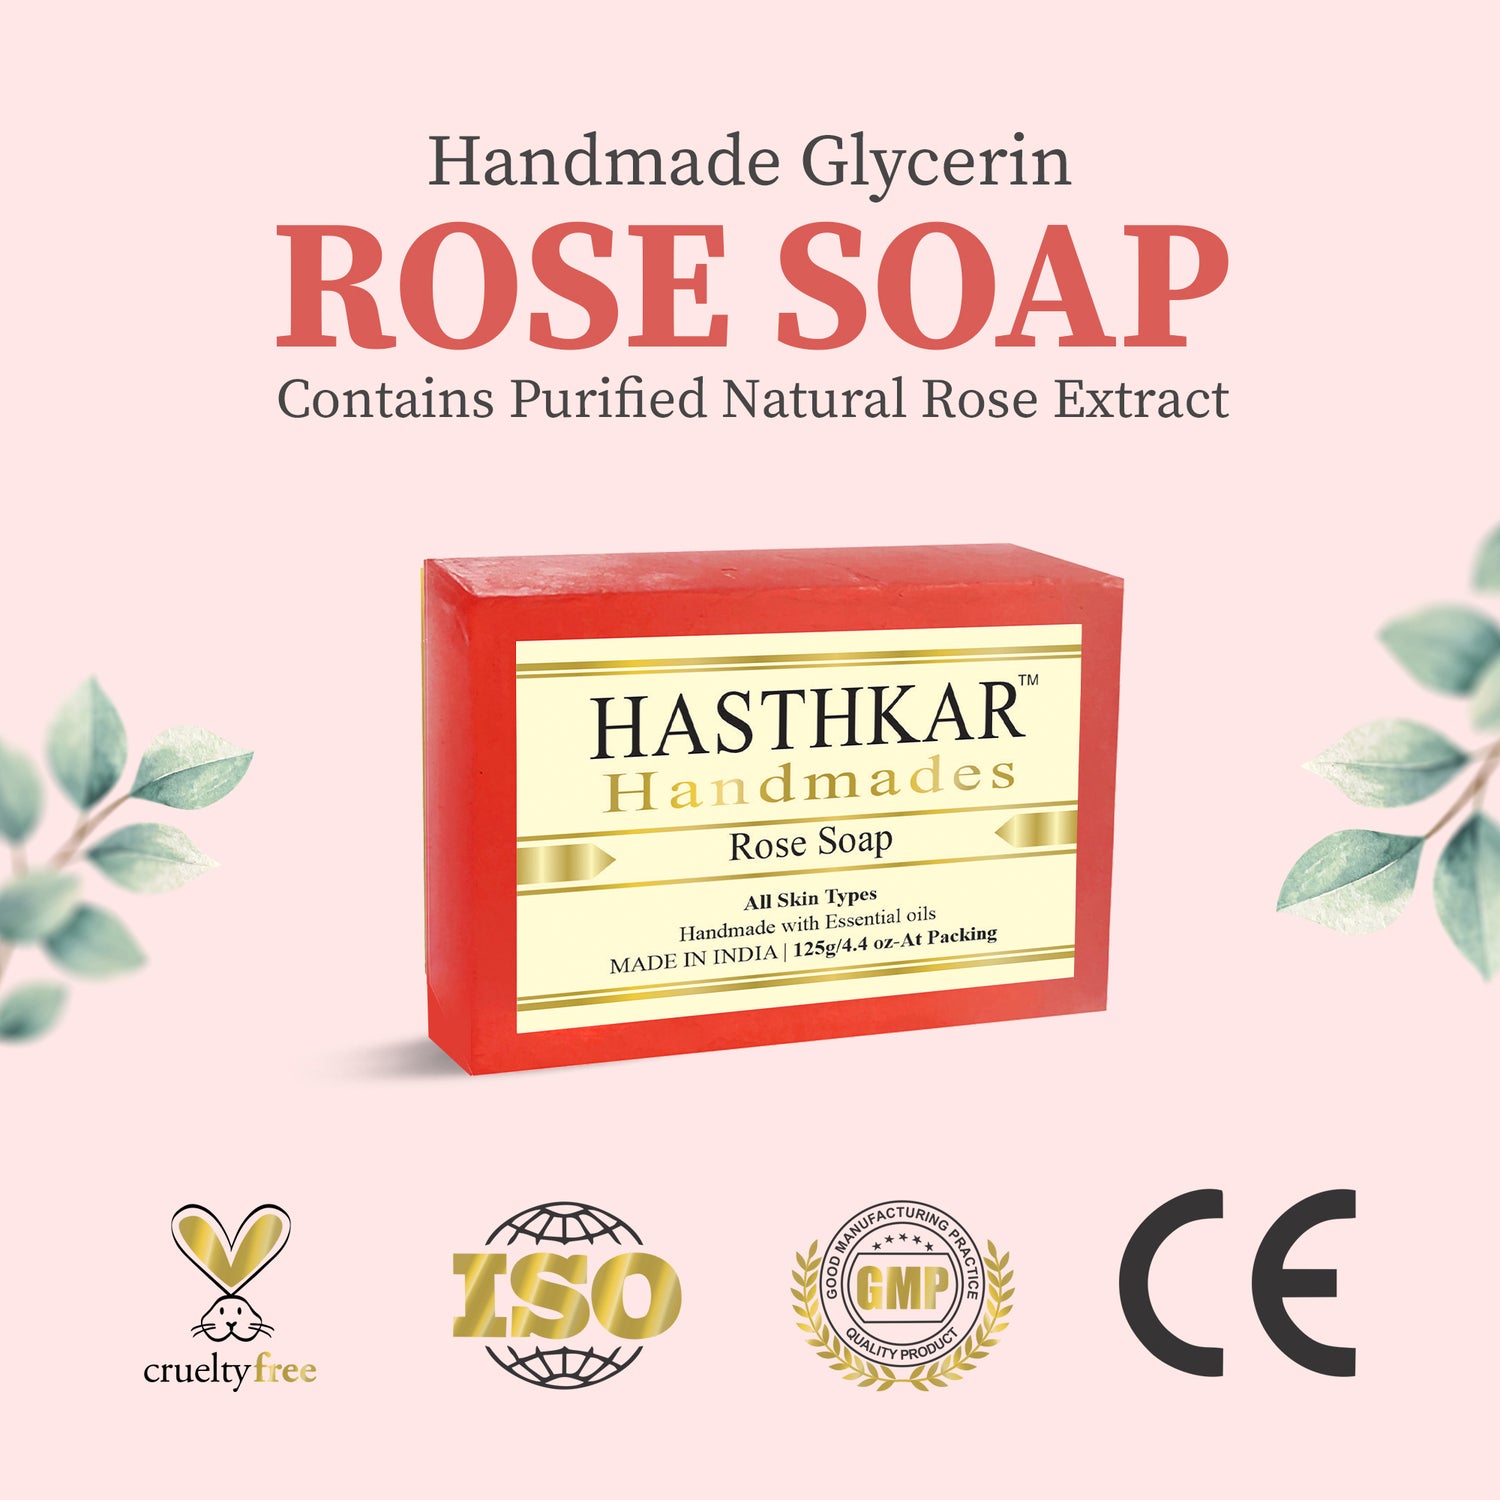 Hasthkar handmades rose bath soap men and women extract 